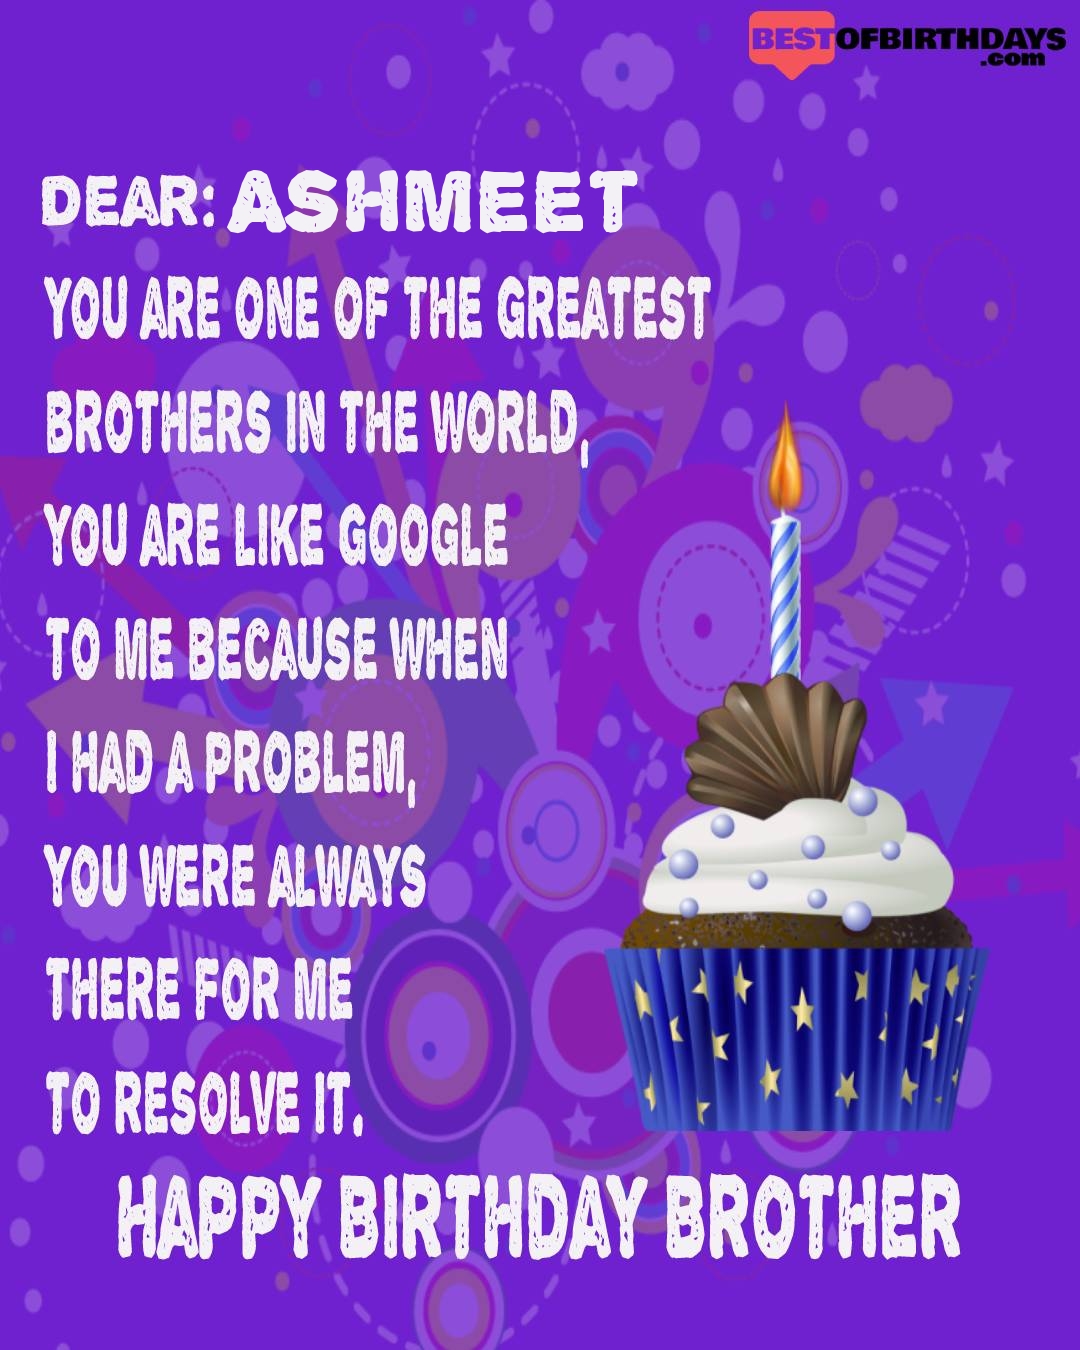 Happy birthday ashmeet bhai brother bro